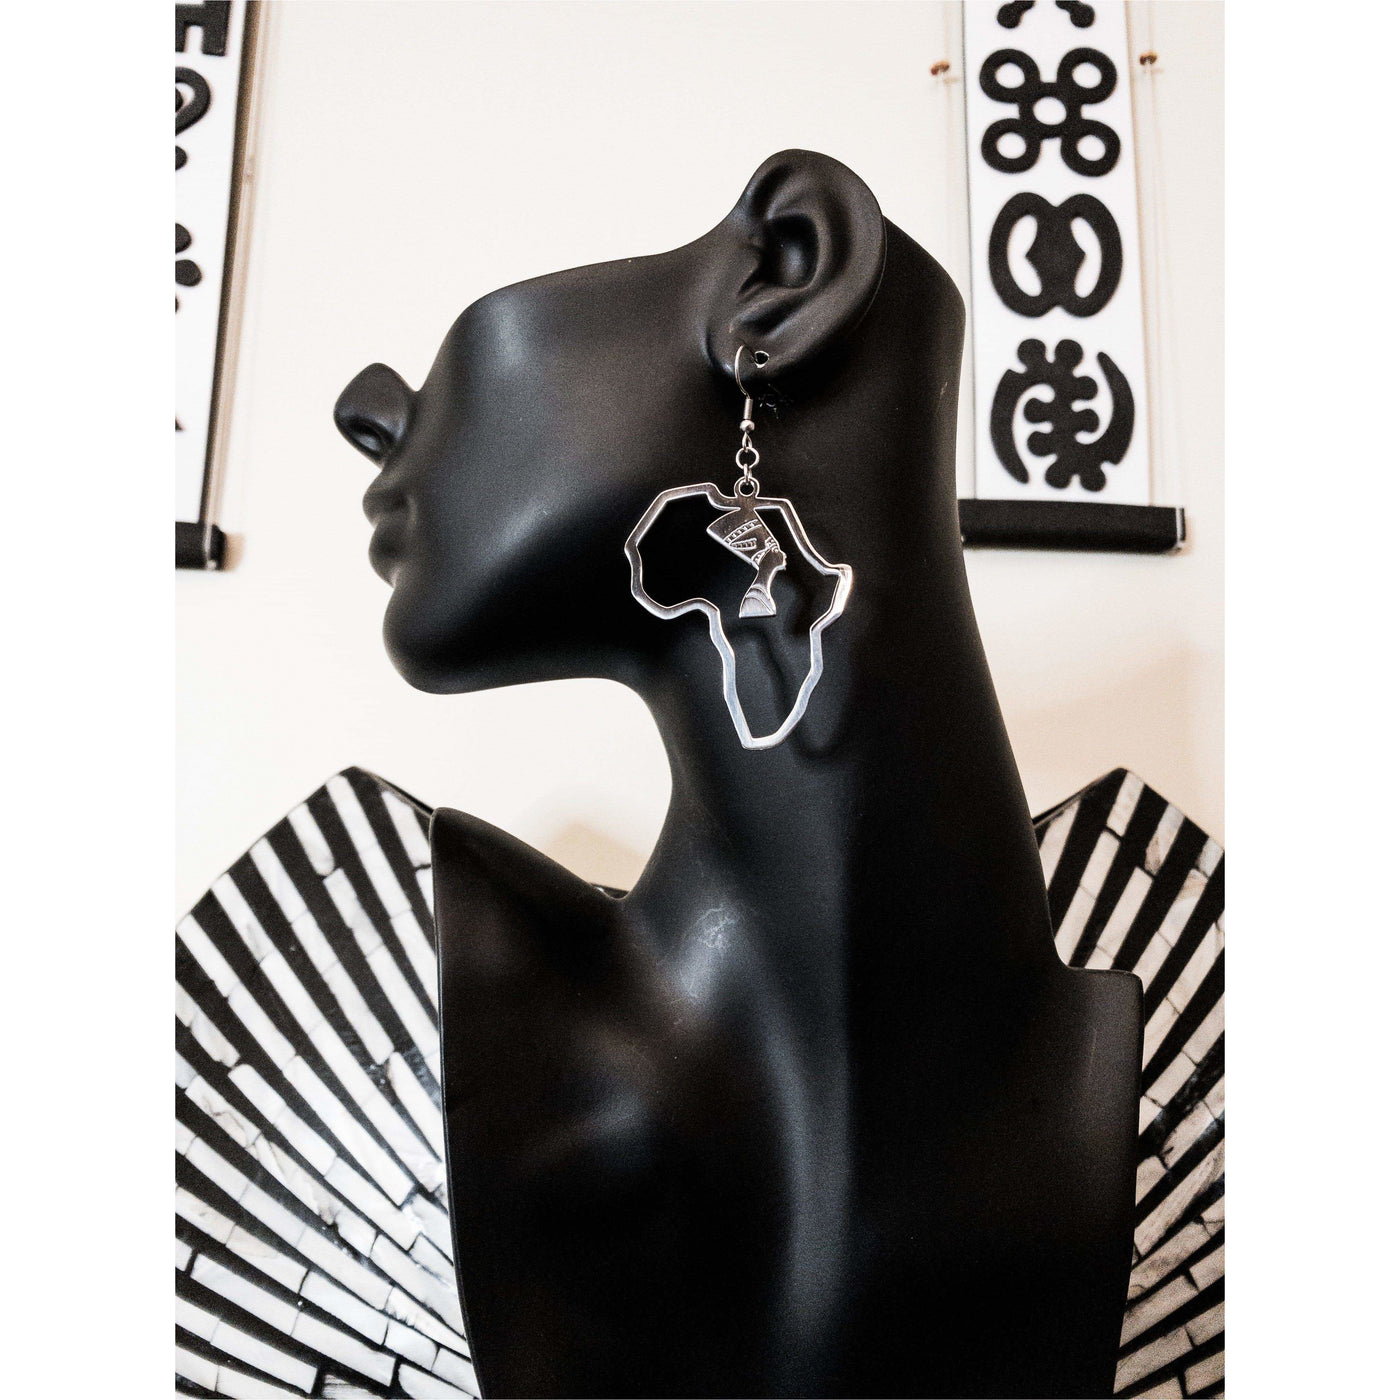 Africa Map Dangling Earrings with Nefertiti Head pendant - Trufacebygrace